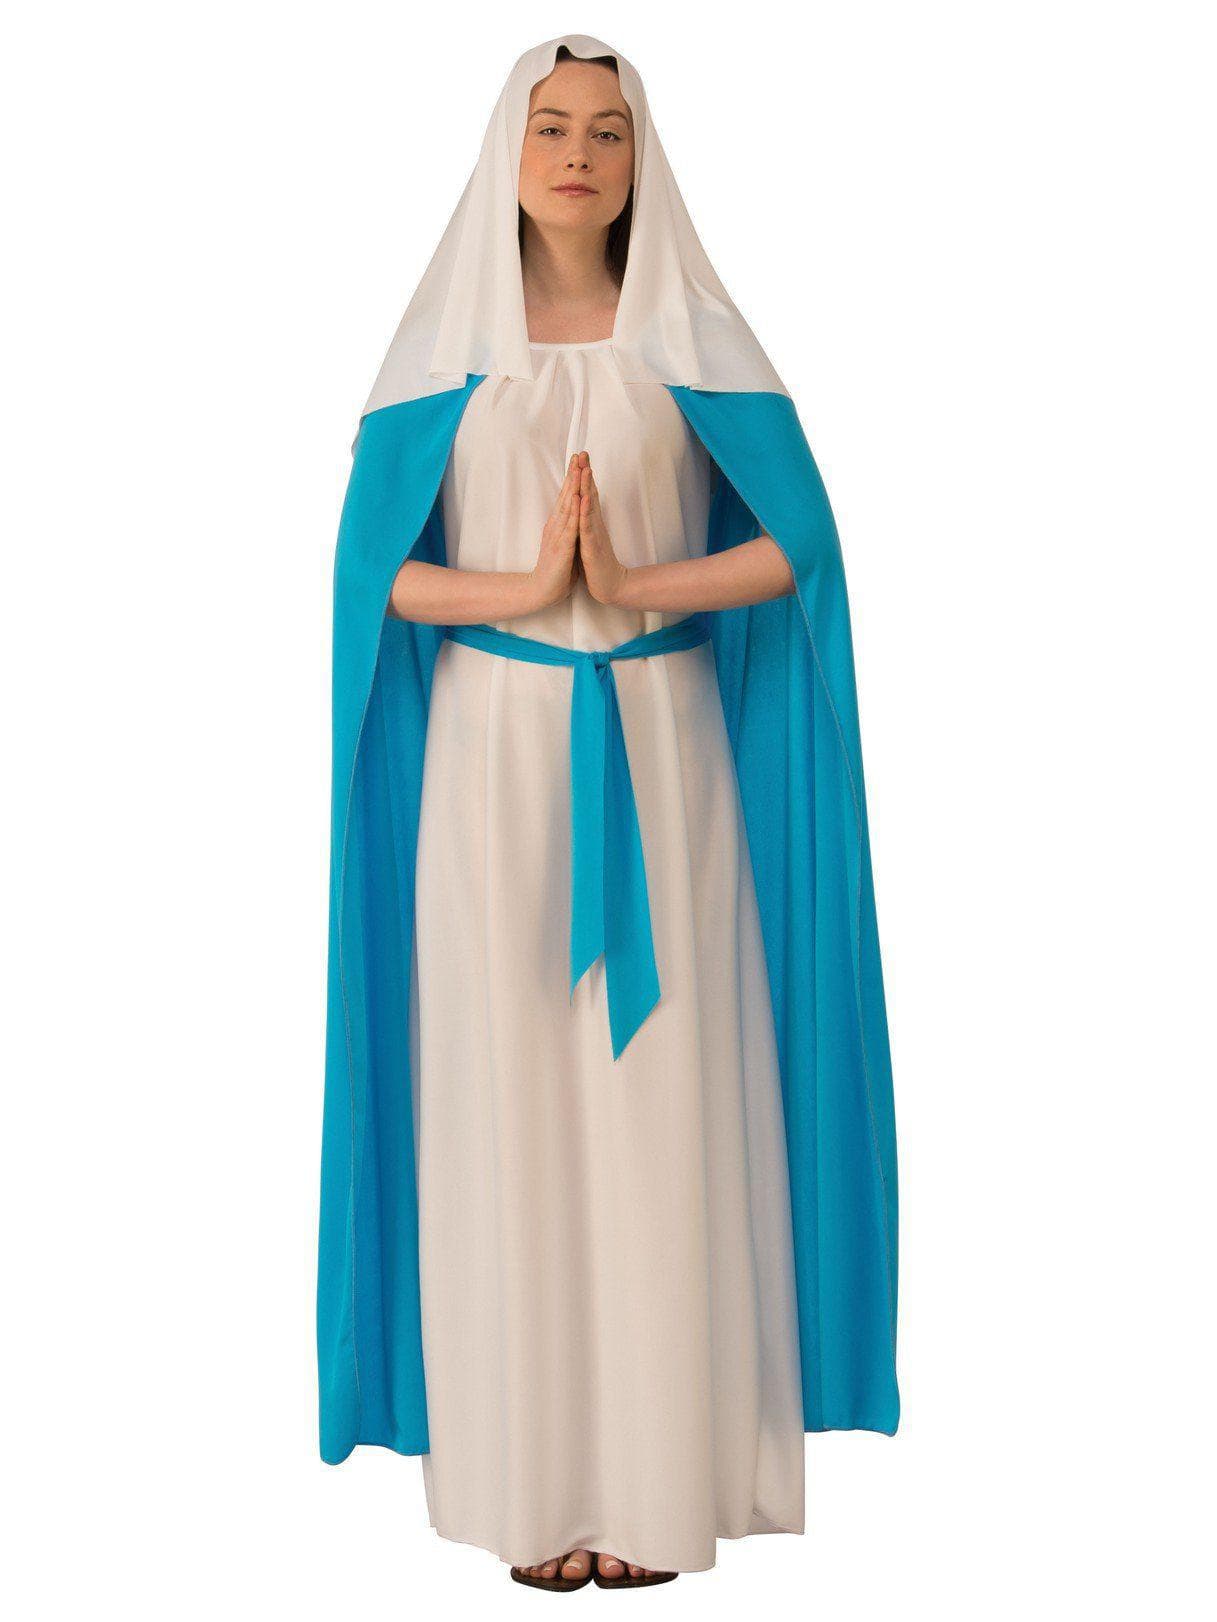 Women's Biblical Mary Costume - costumes.com